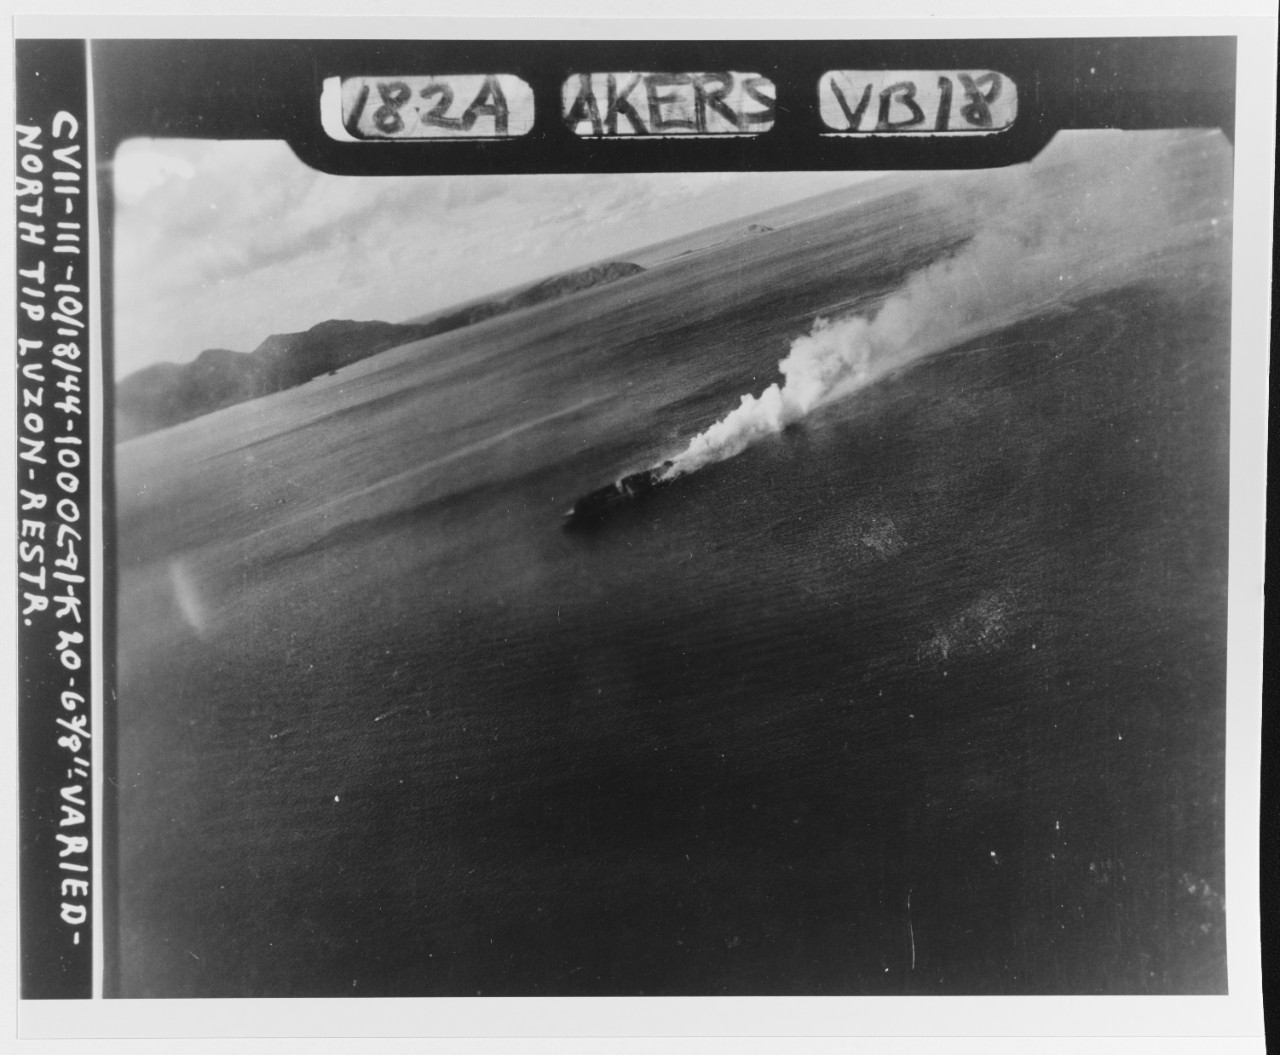 Carrier strikes off Luzon, 18 October 1944.